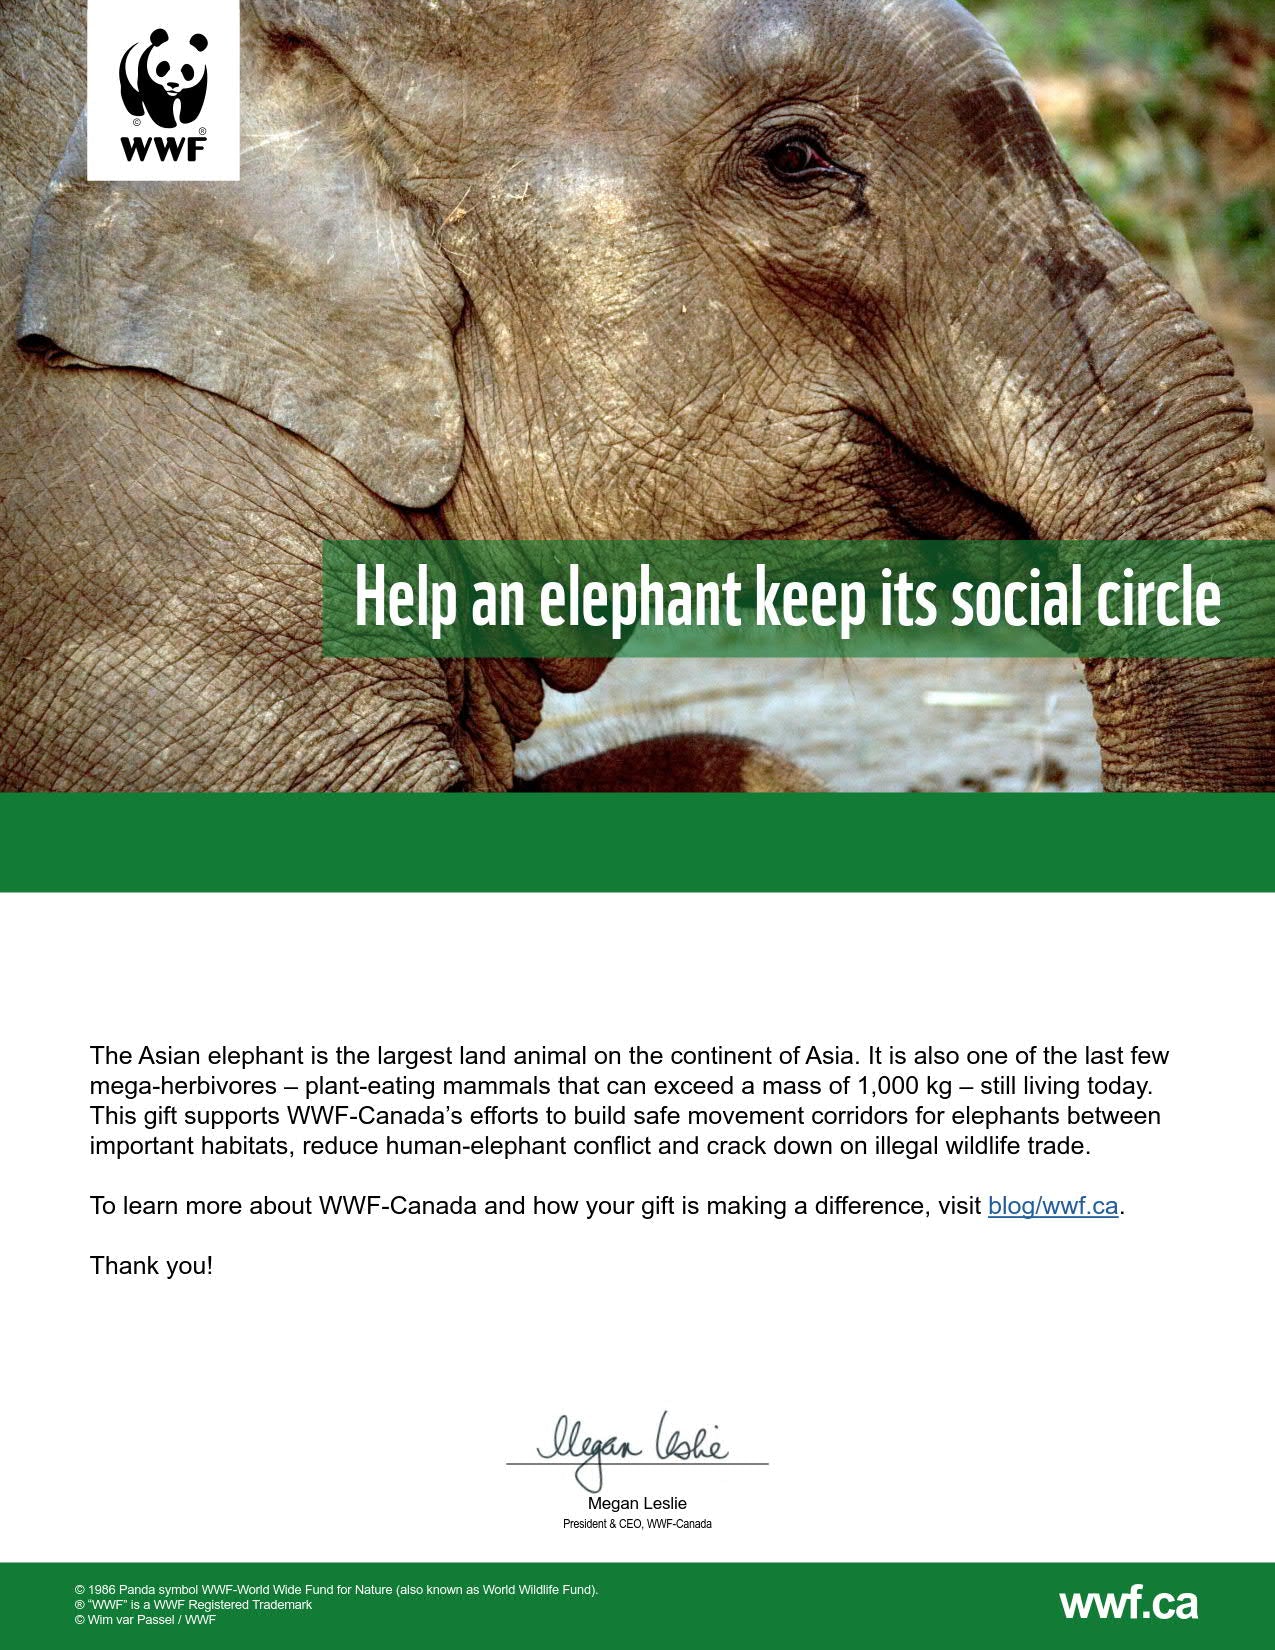 protect an elephant's social circle - WWF-Canada